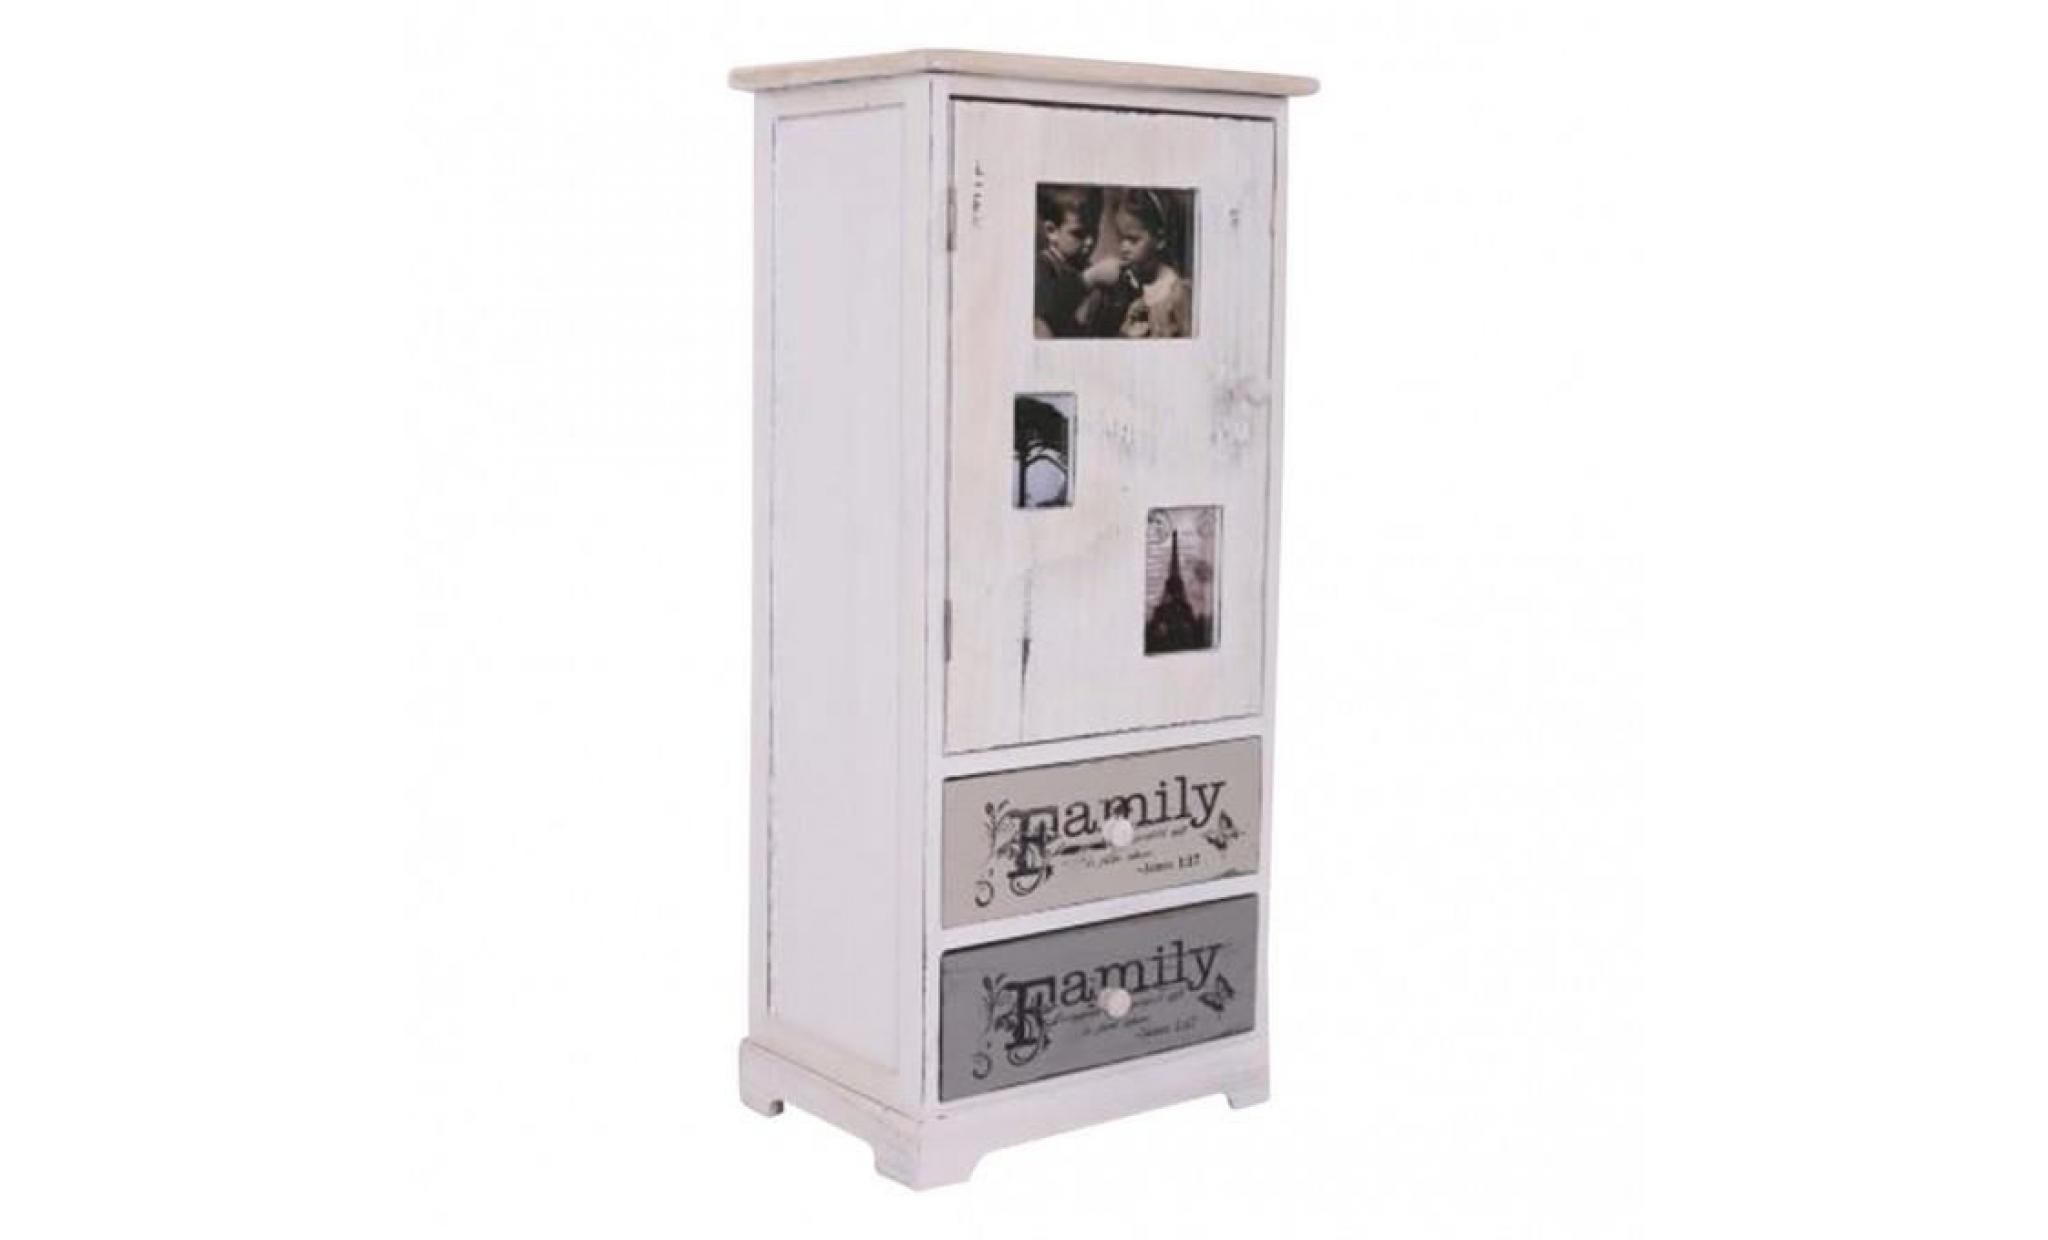 mobili rebecca® meuble d'appoint commode 1 port cadre photo 2 tiroirs family bois blanc vintage pas cher